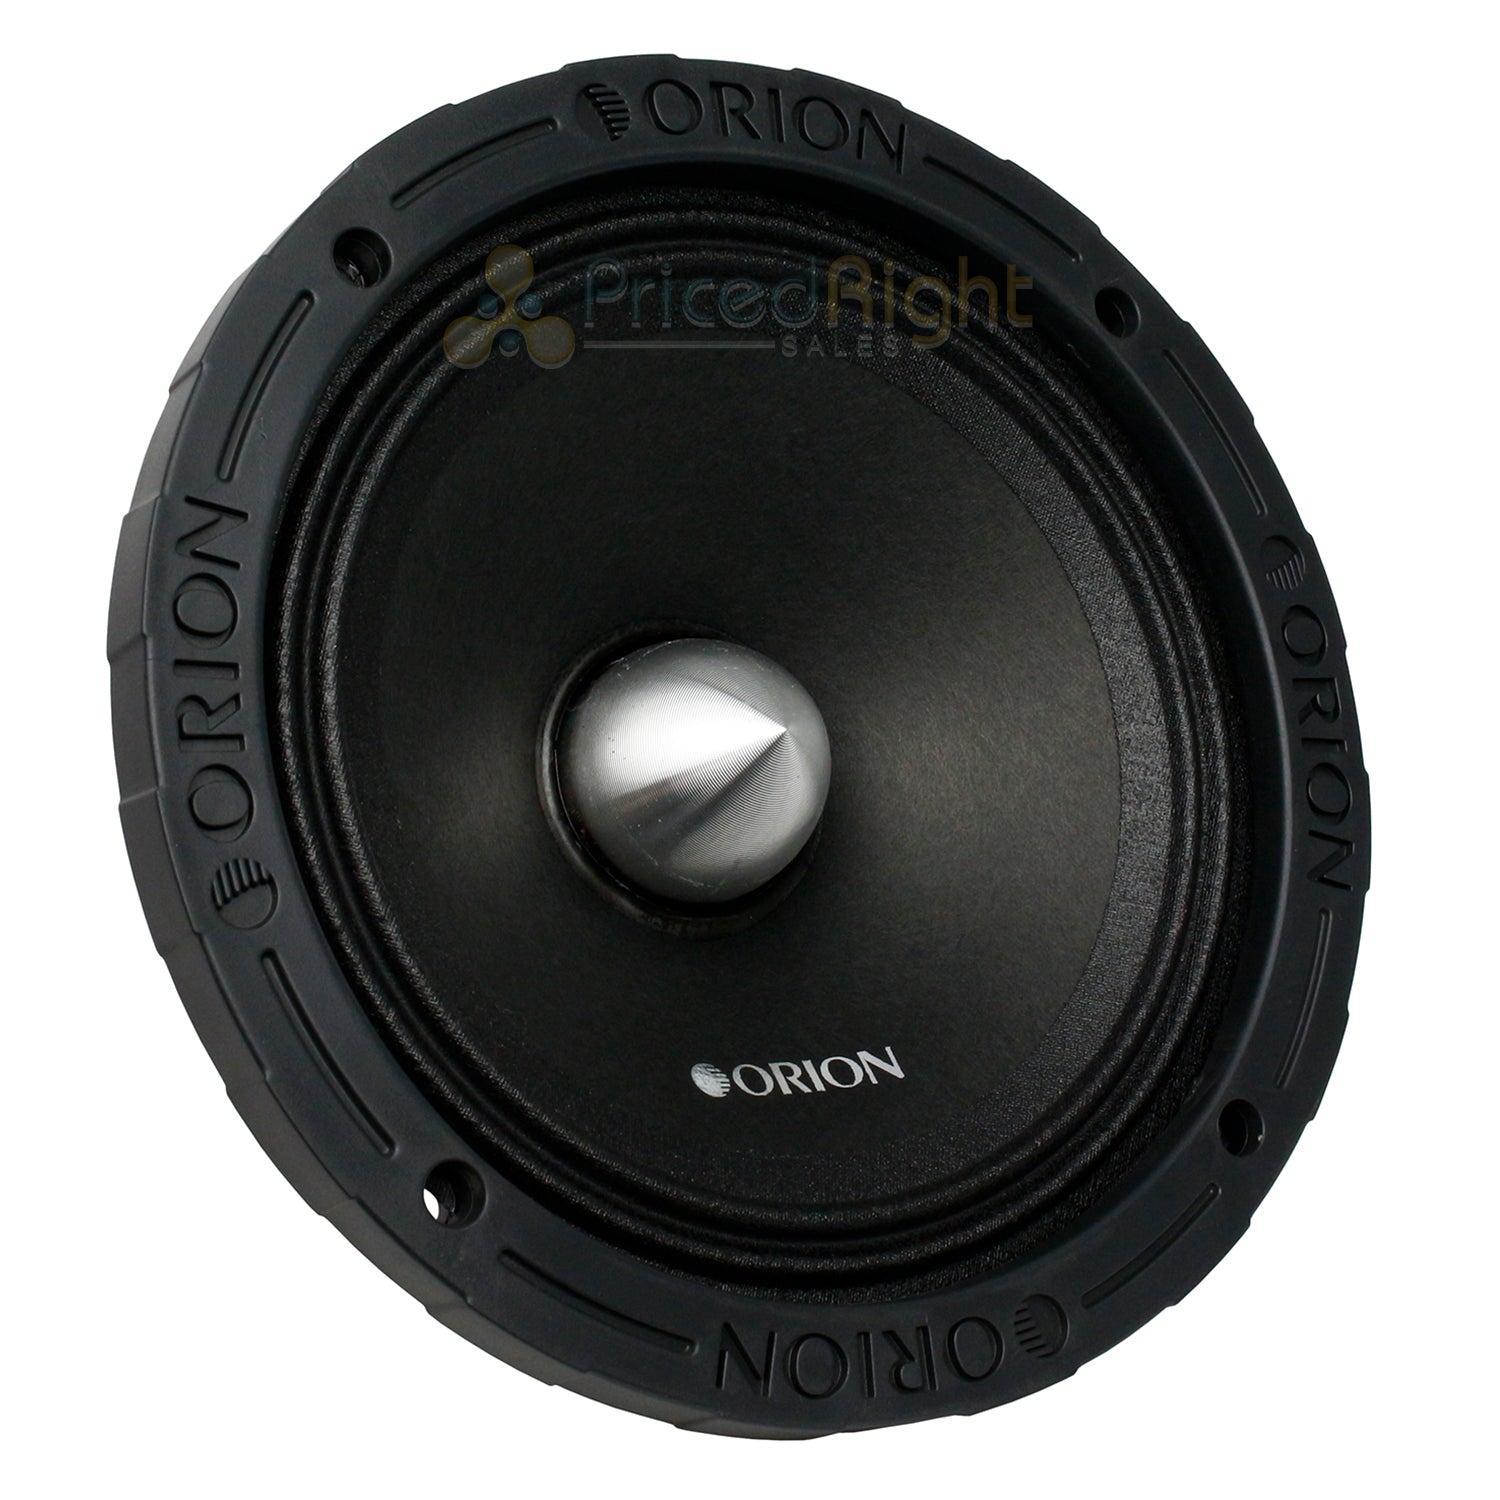 Orion XTX658 6.5" High Performance Midrange Car Speaker Pair 8 Ohm 1400W Max